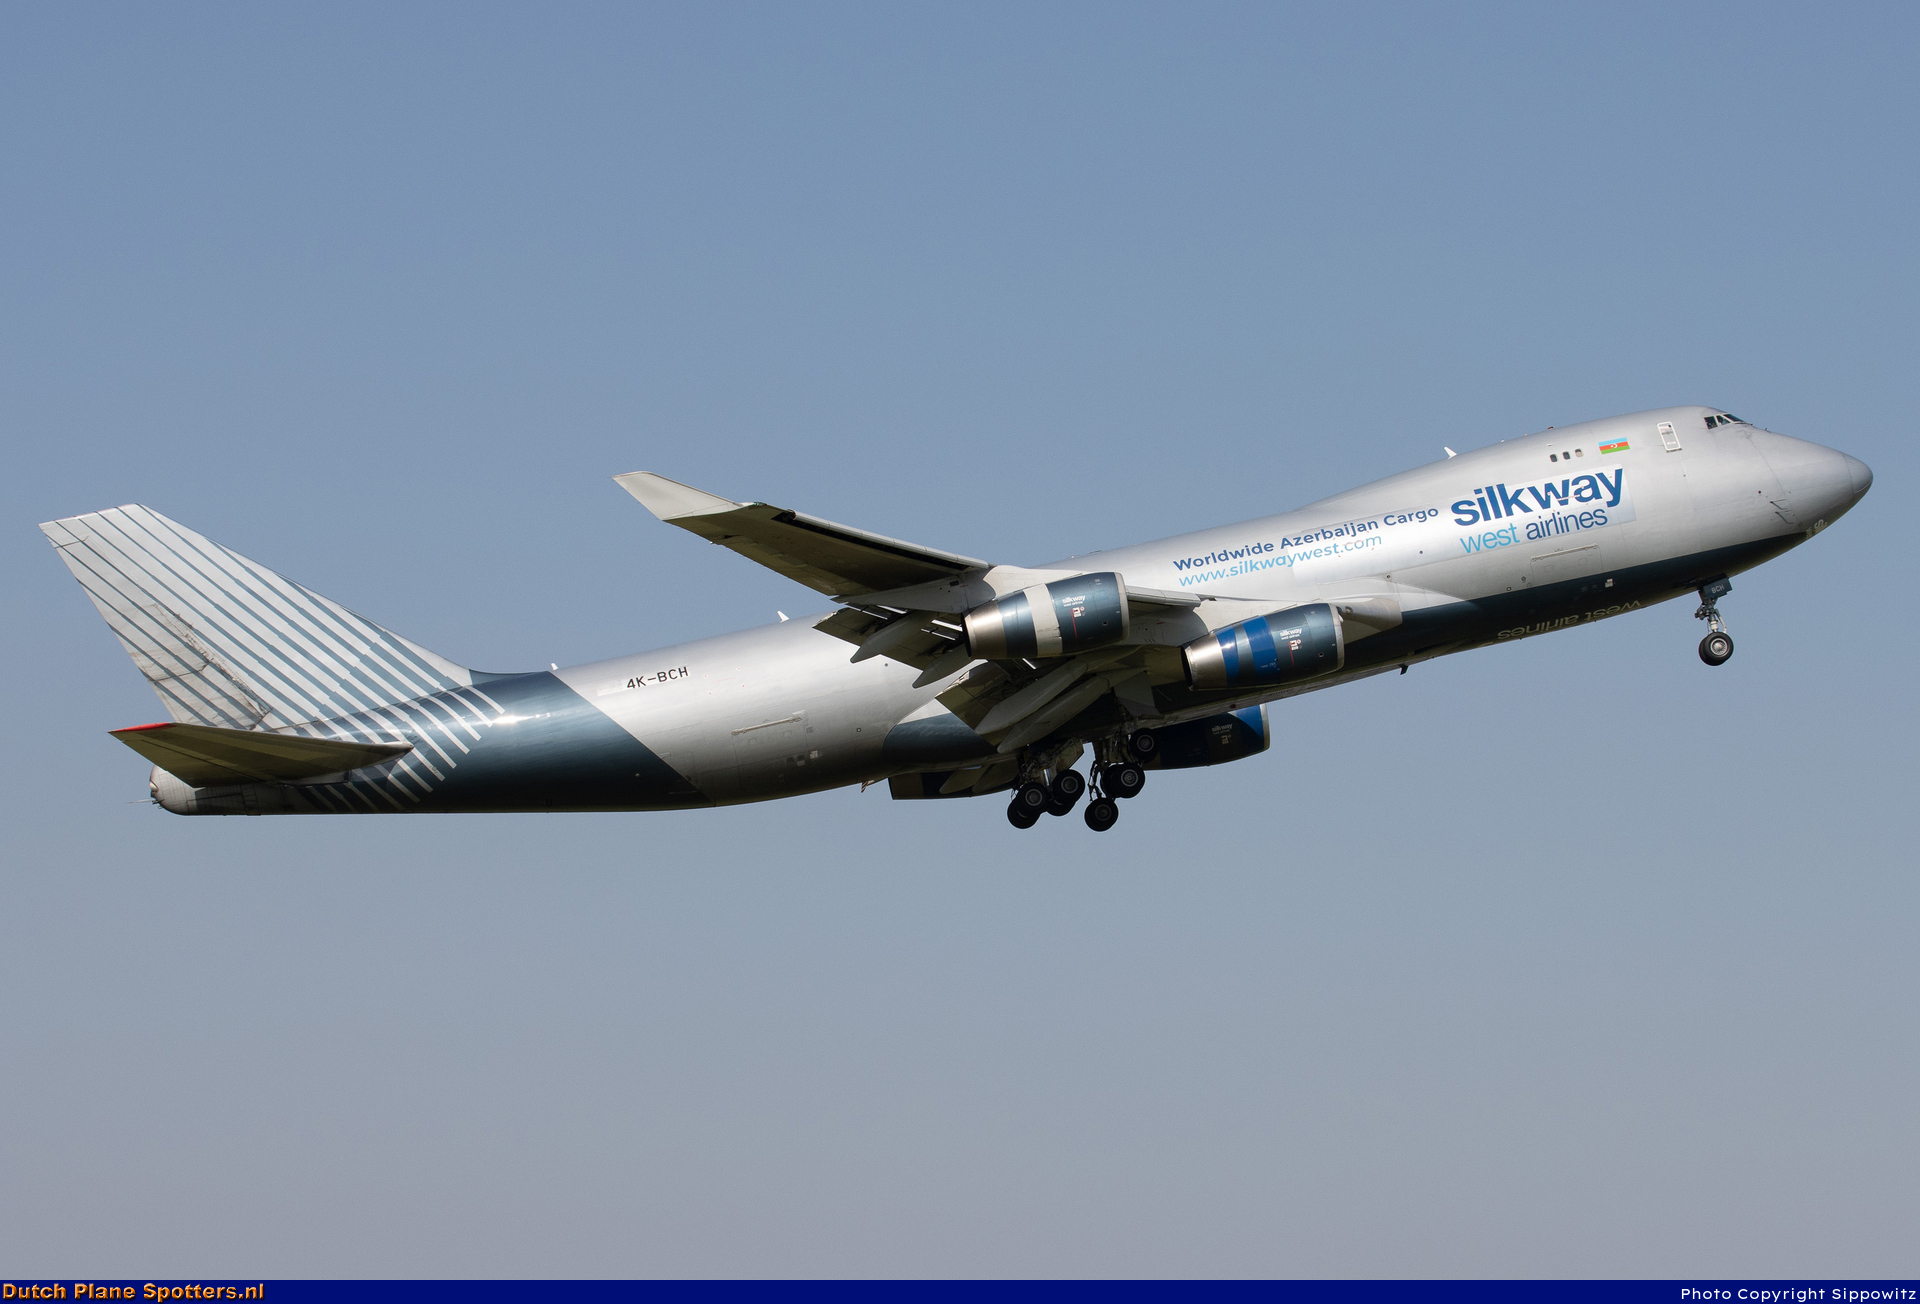 4K-BCH Boeing 747-400 Silk Way West Airlines by Sippowitz